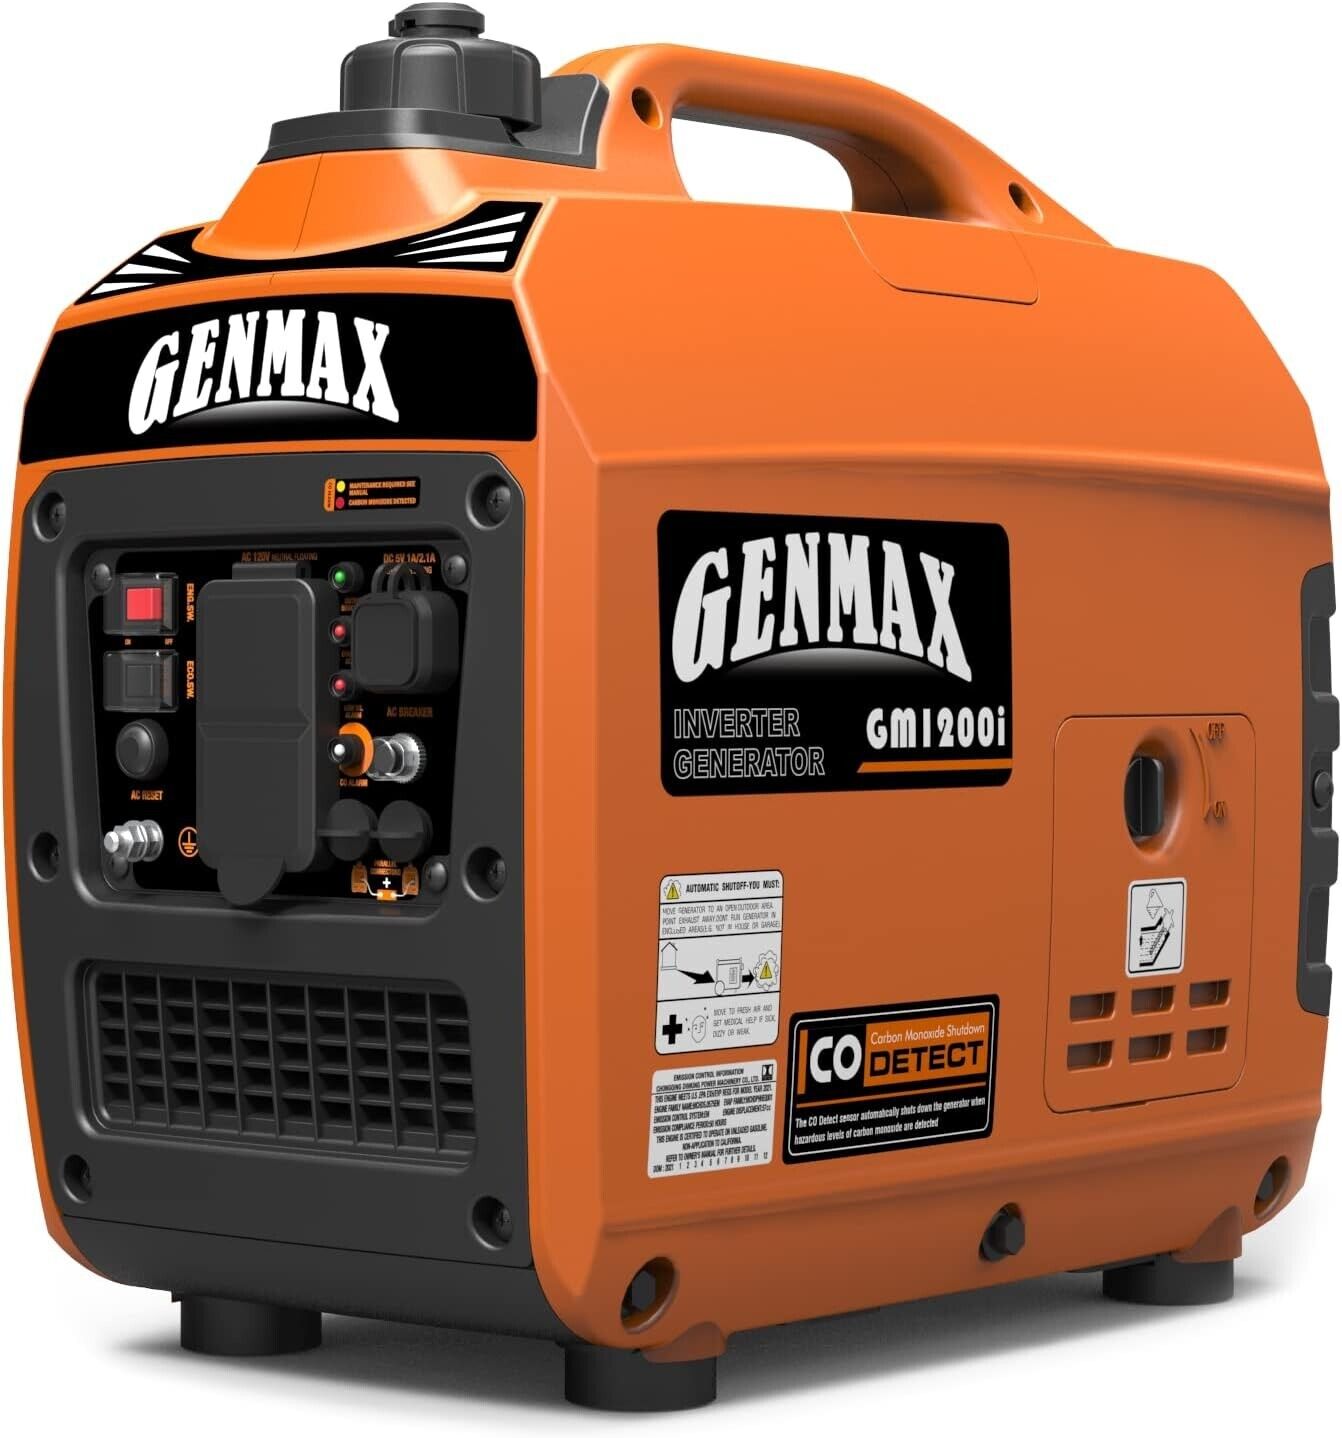 GENMAX 1200W Ultra Inverter Generator Portable Quiet Gas Engine EPA Compliant